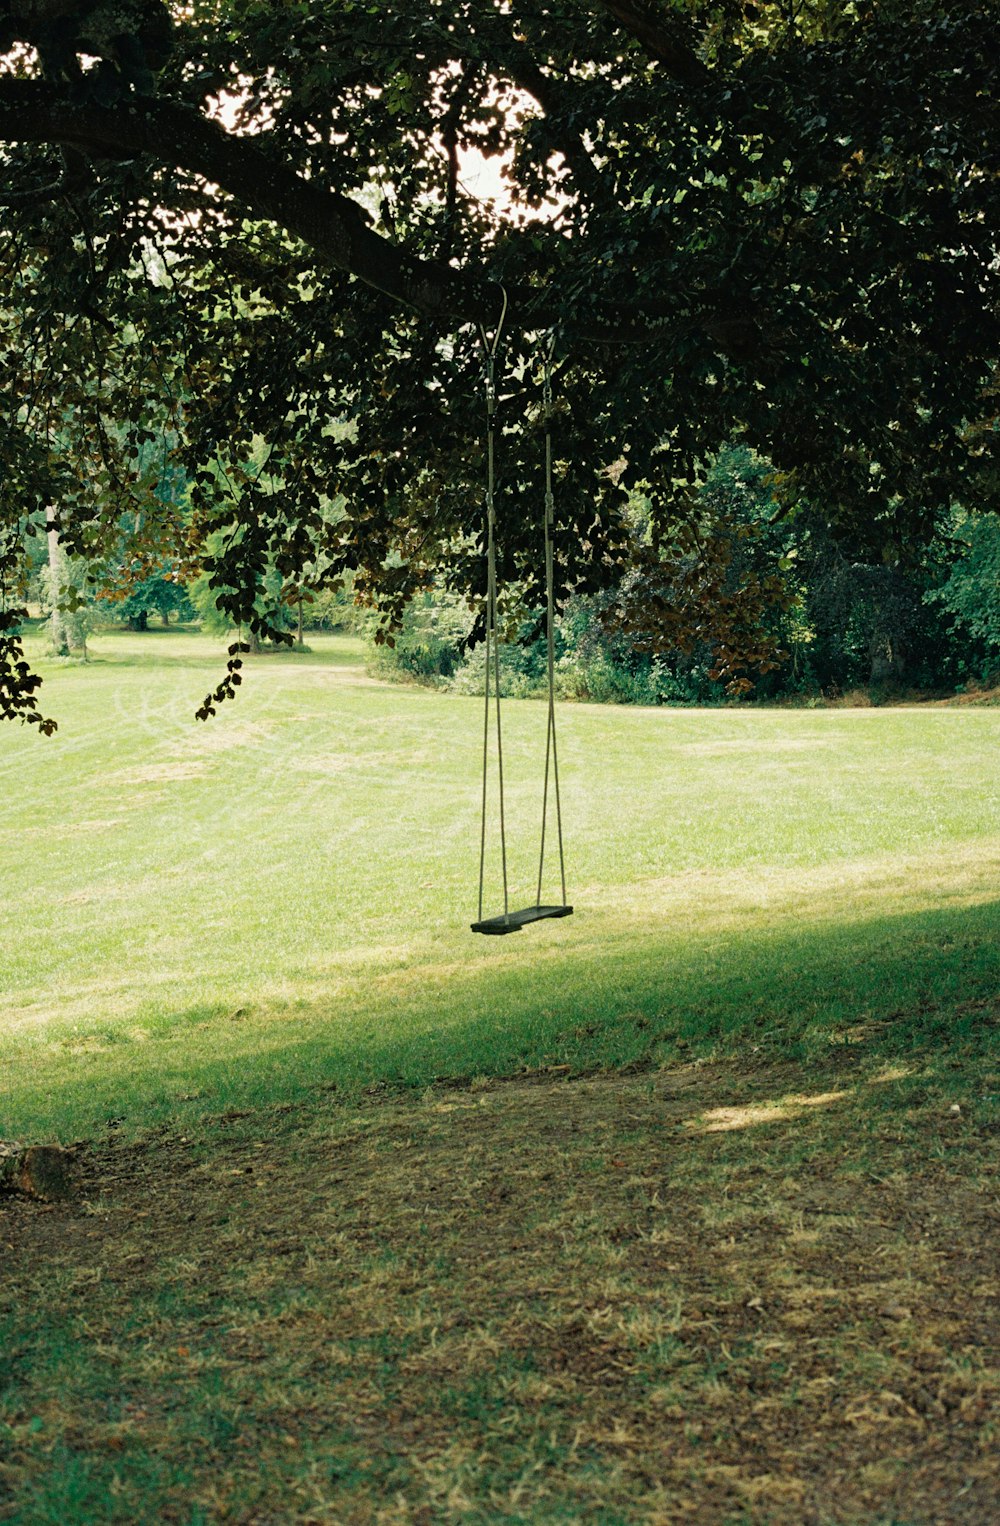 swing tied from tree branch on grass field